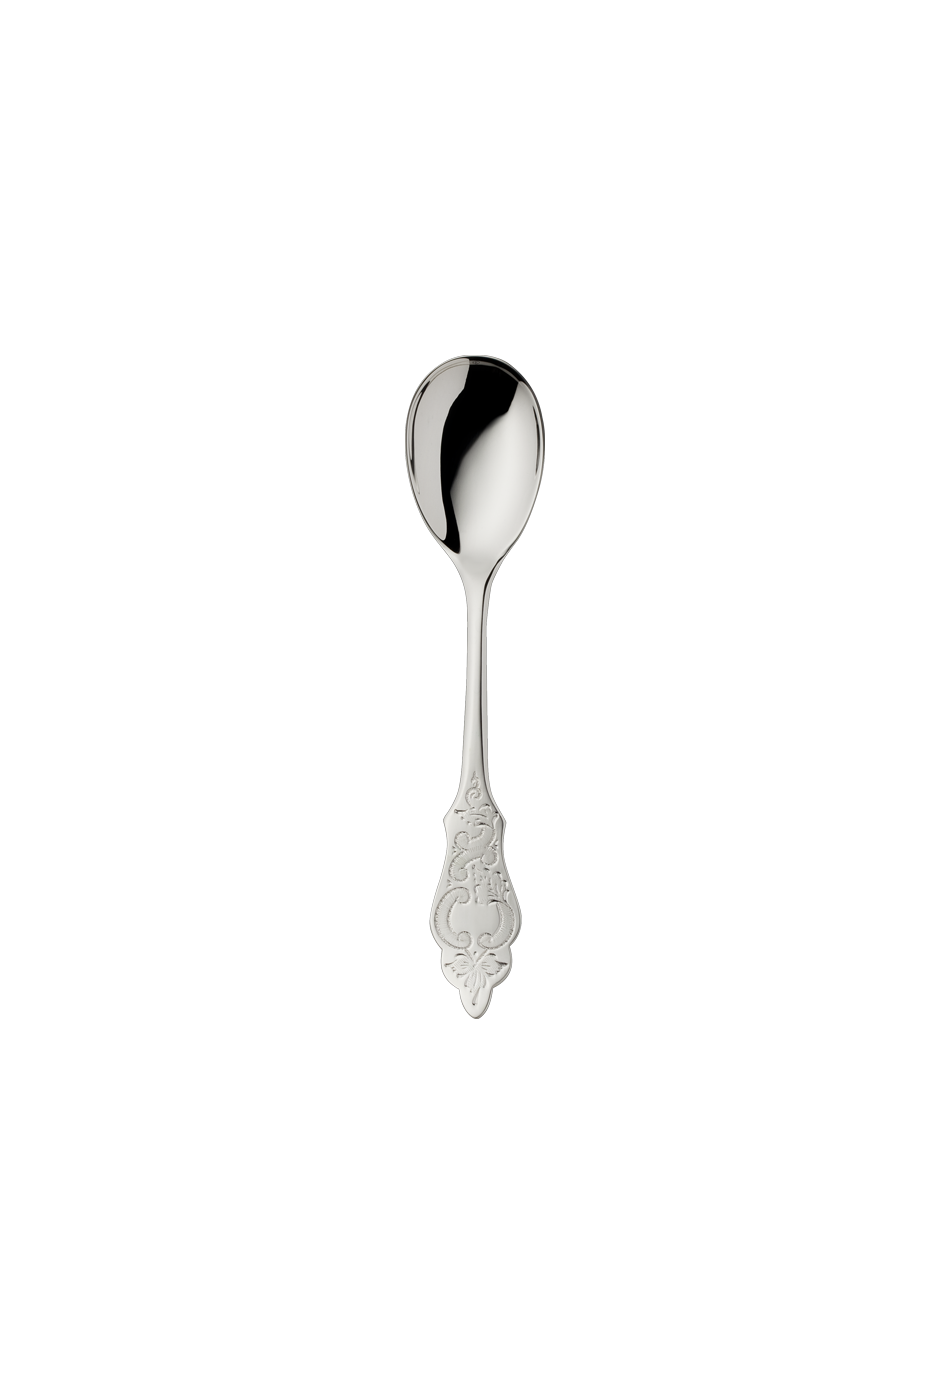 Ostfriesen Ice-Cream Spoon (150g massive silverplated)